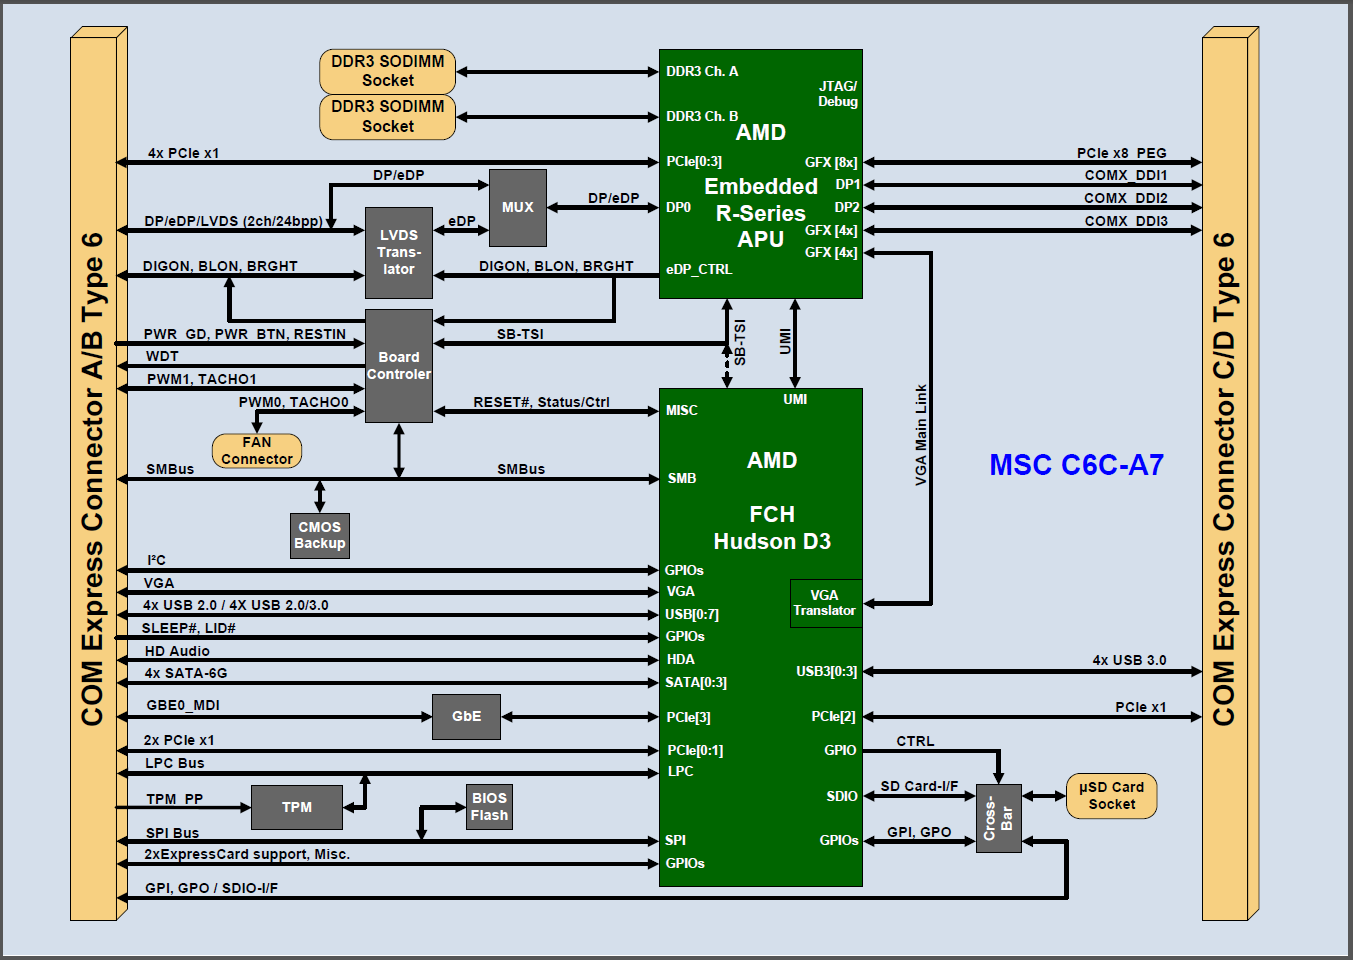 Figure 2: Block diagram of the MSC C6C-A7 CPU module with digital display interfaces